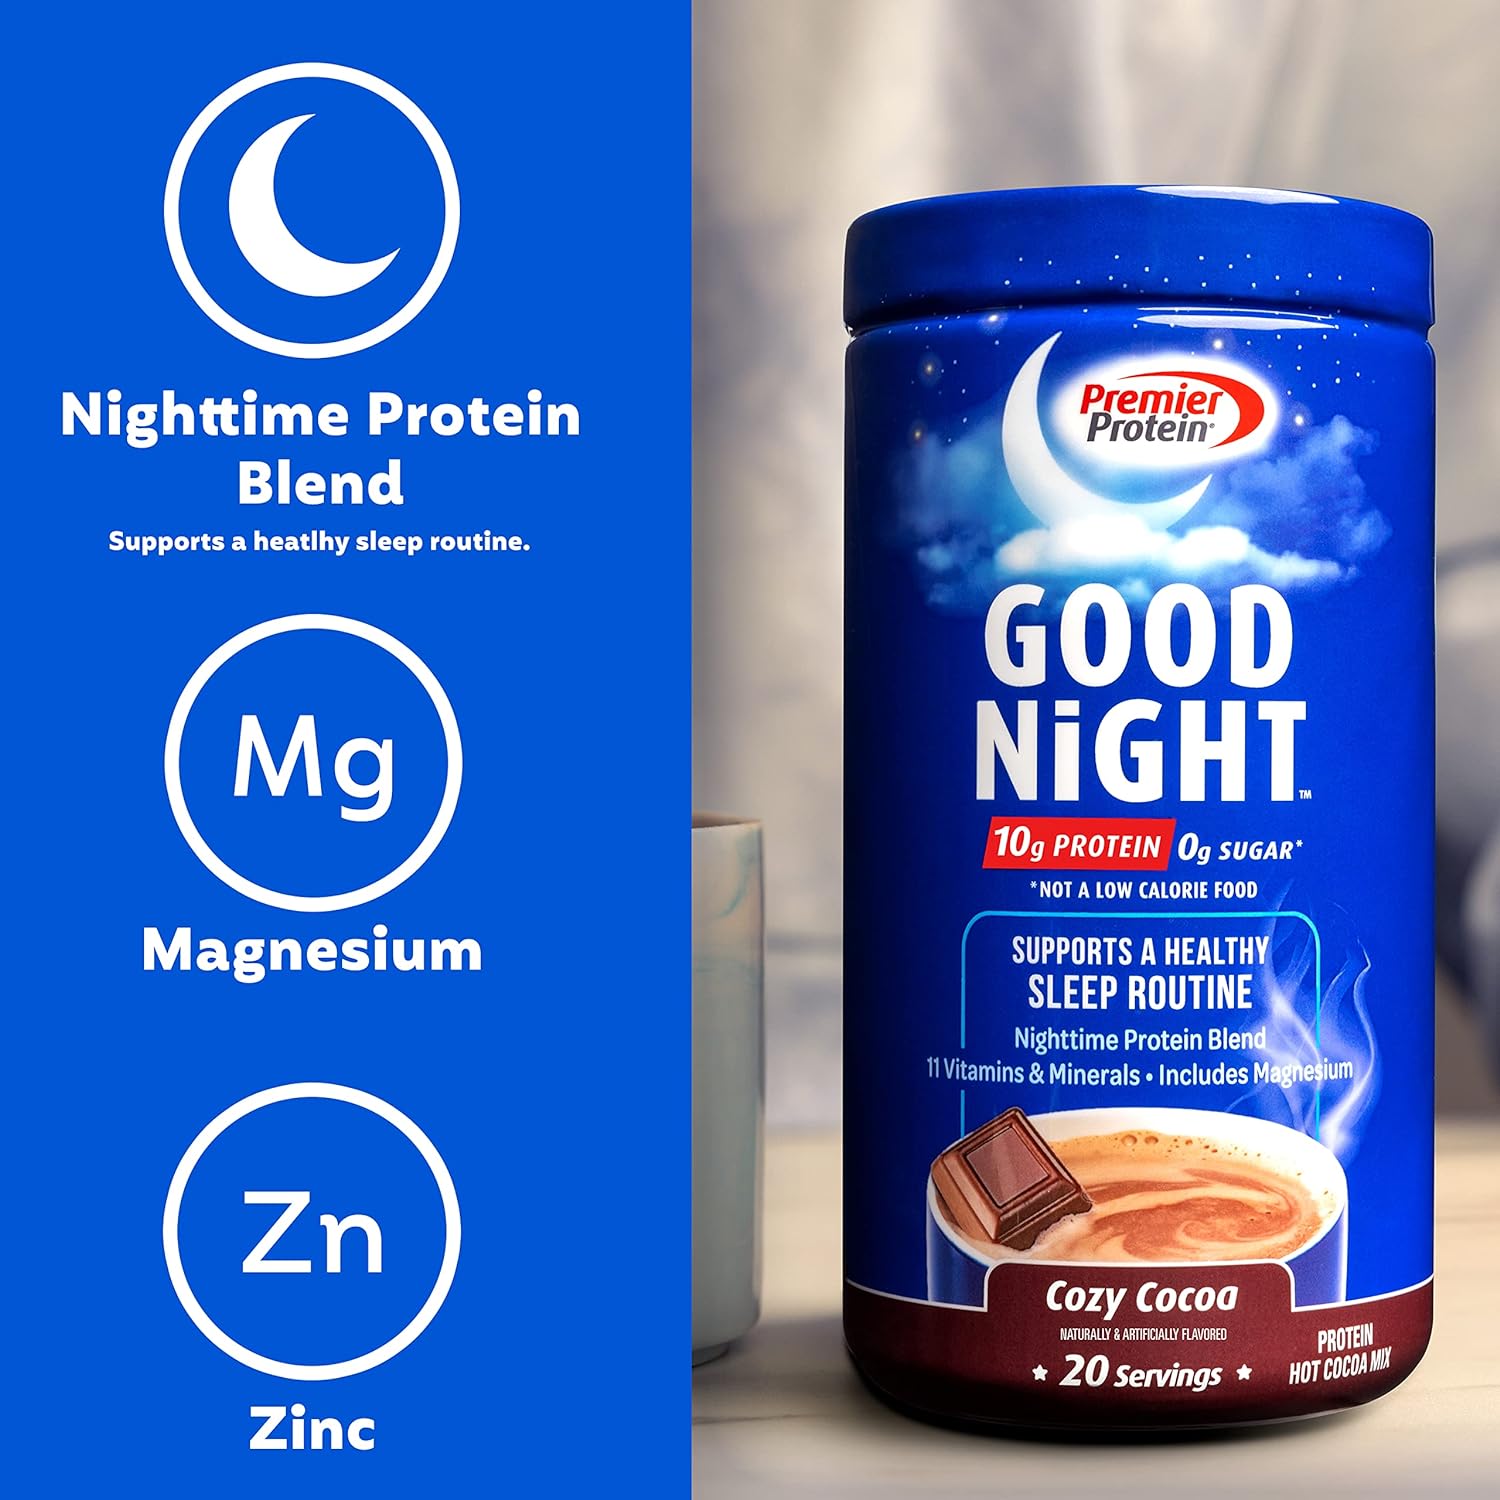 Premier Protein Good Night Protein Powder, Hot Cocoa Mix, 10g Protein, 0g Sugar, 11 Vitamins & Minerals, Nighttime Protein Blend, Magnesium, Zinc, 20 Serve, 1 Tub : Health & Household